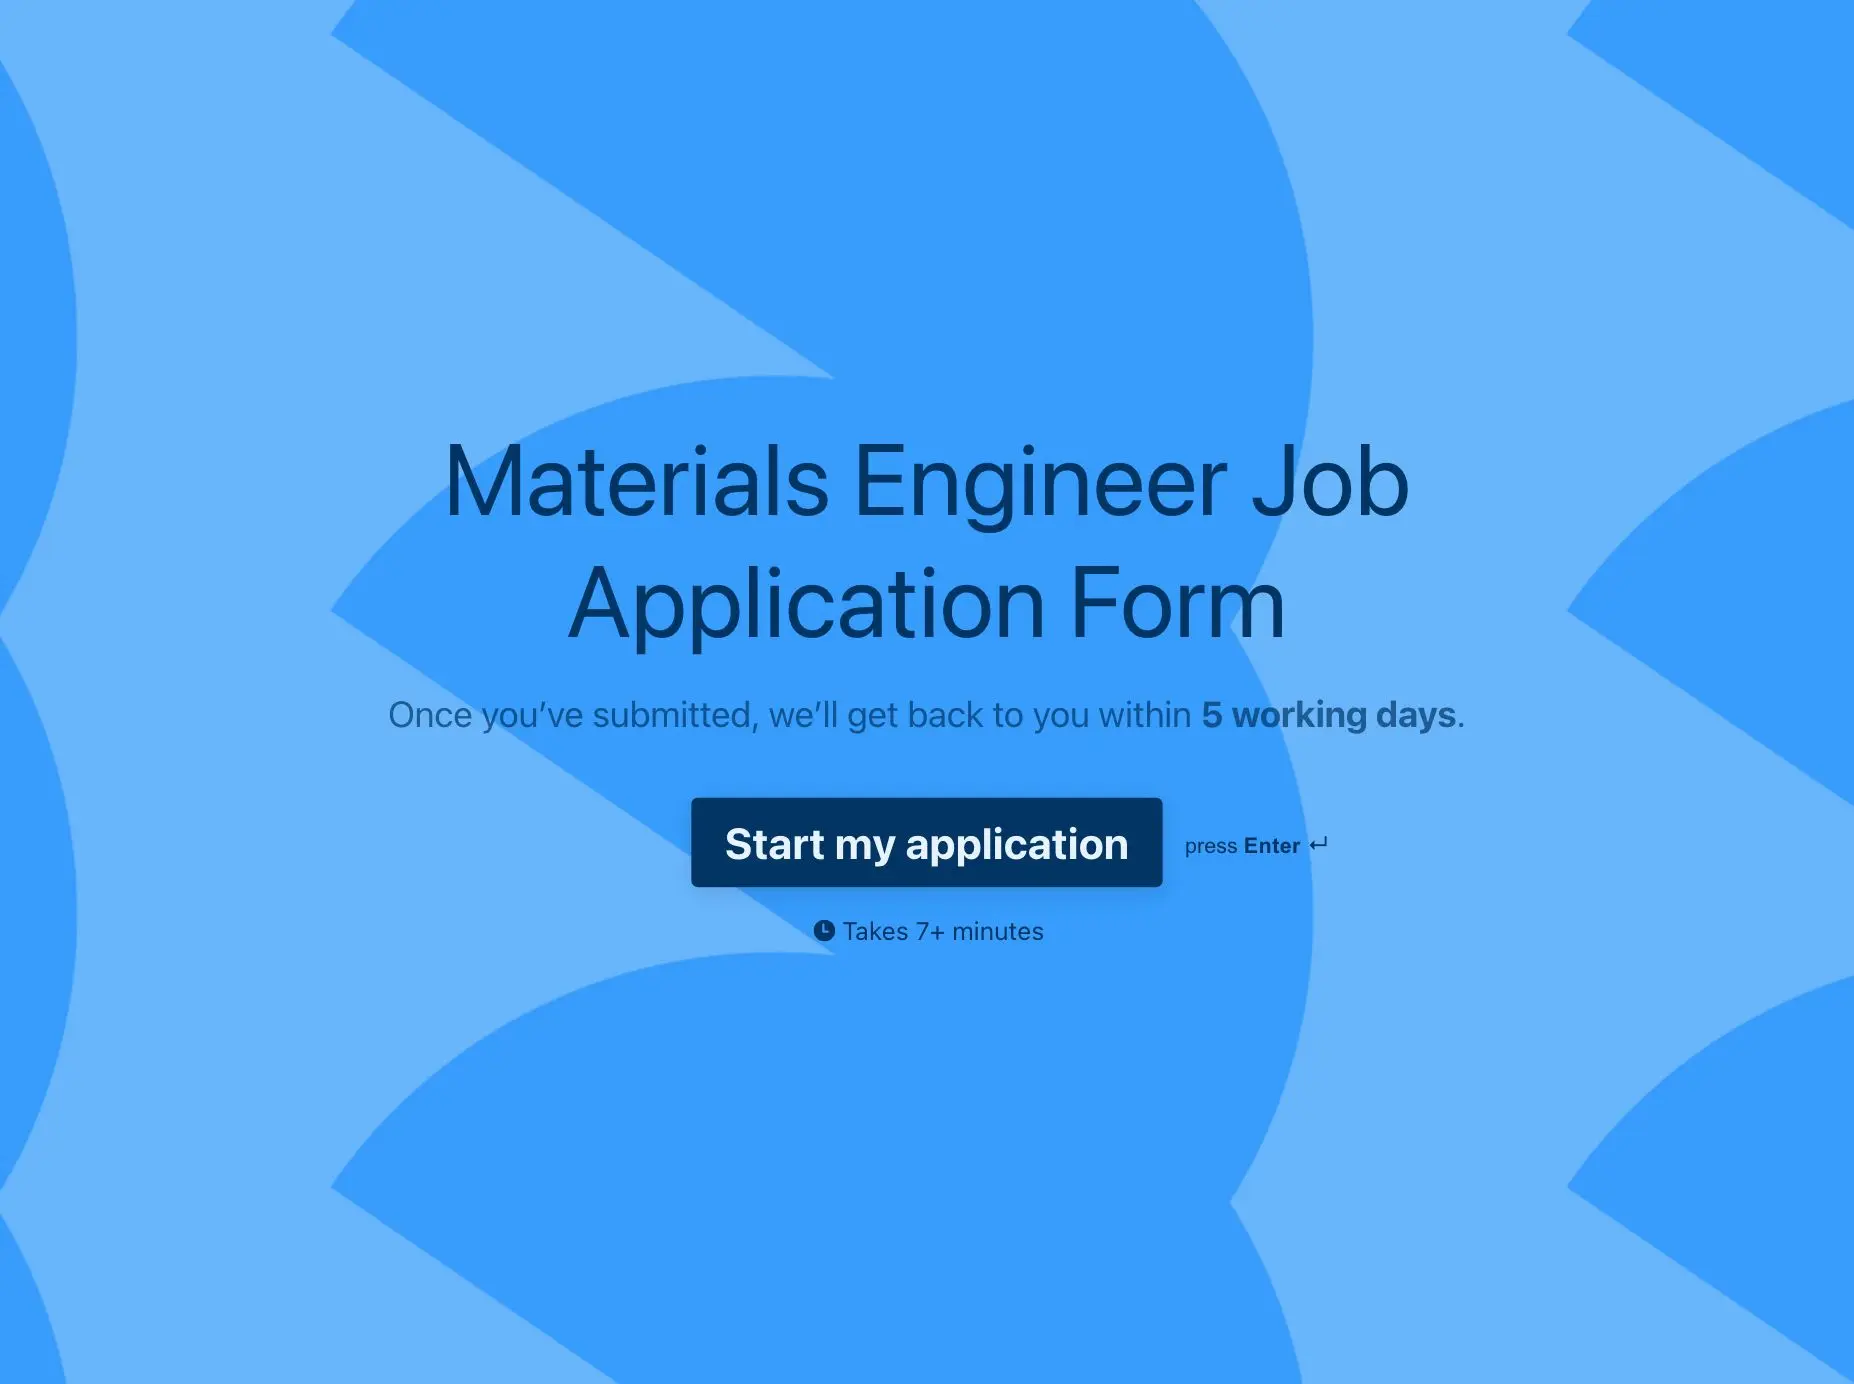 Materials Engineer Job Application Form Template Hero